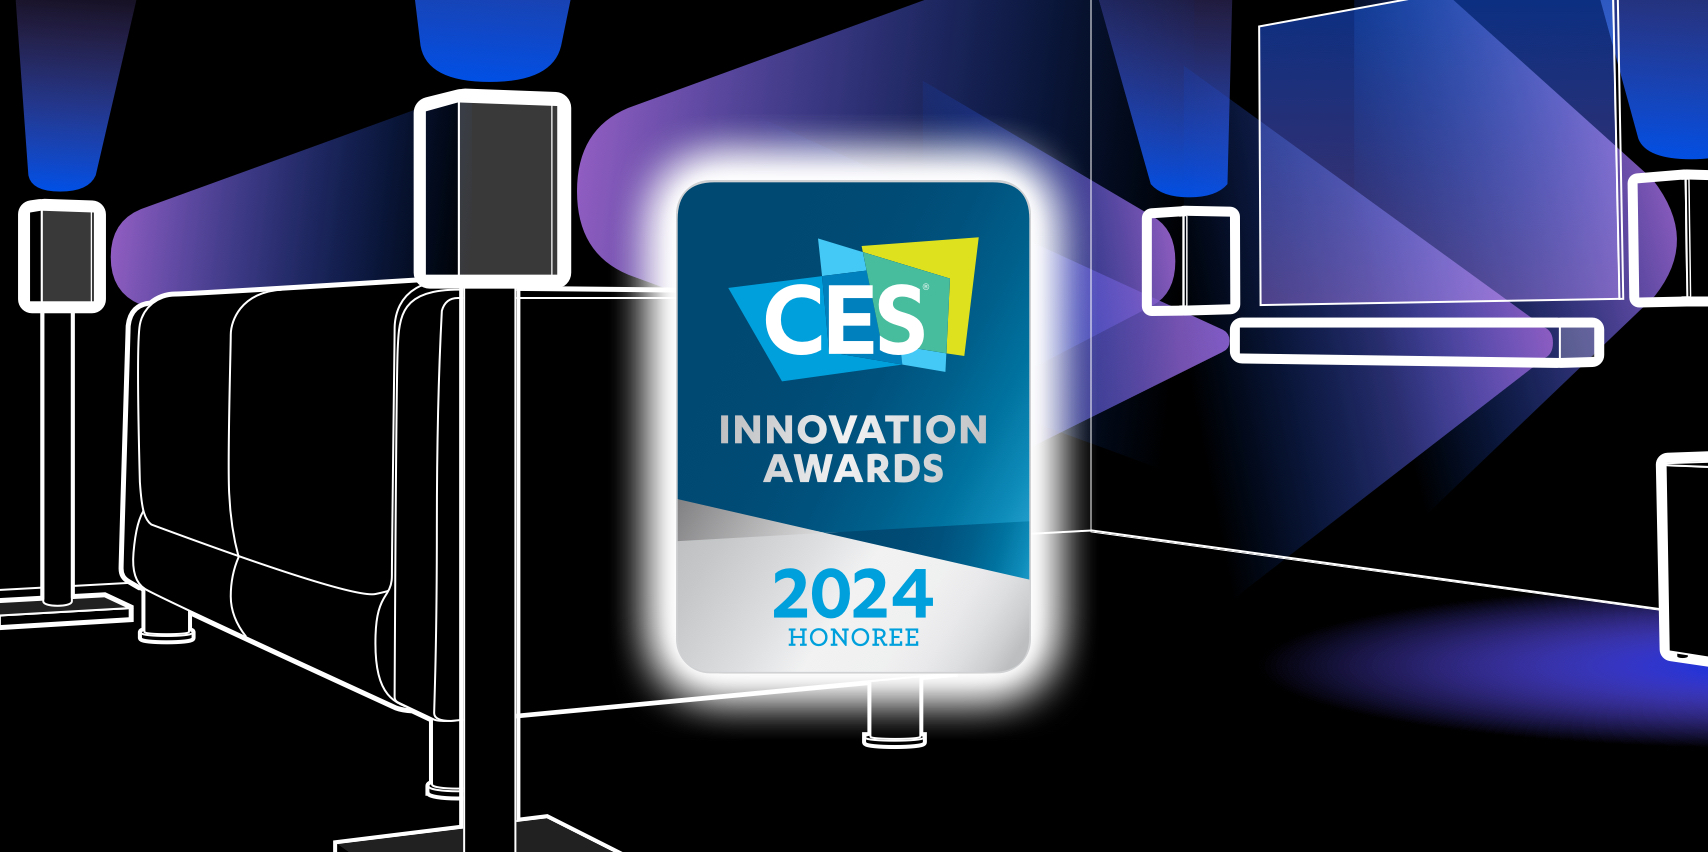 CES 2024 Award Image